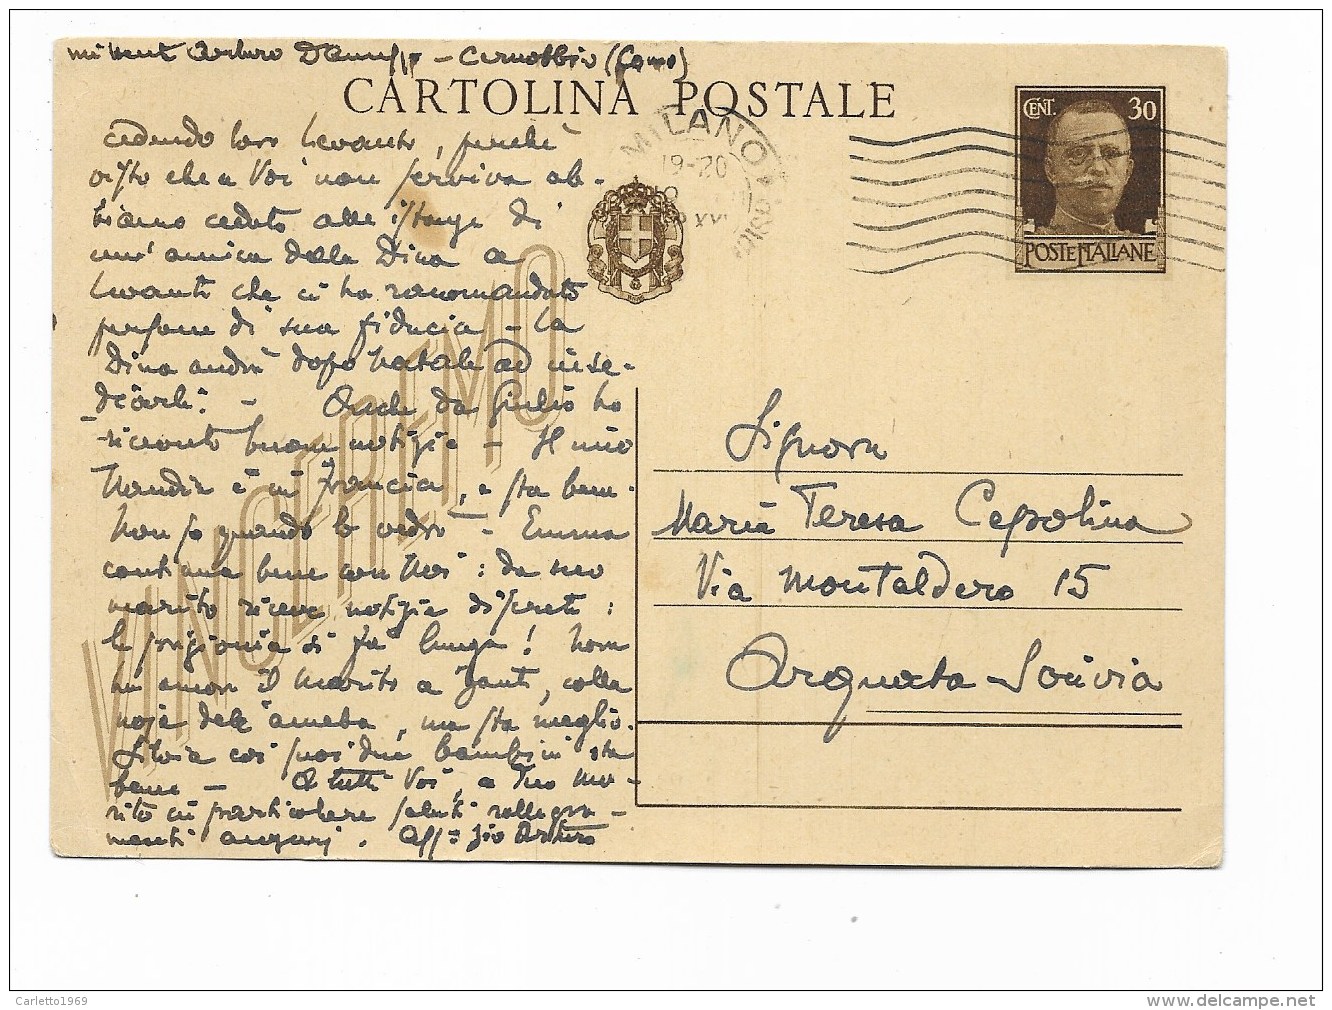 CARTOLINA POSTALE  TIMBRO MILANO COMO 1942  - VIAGGIATA FG - History